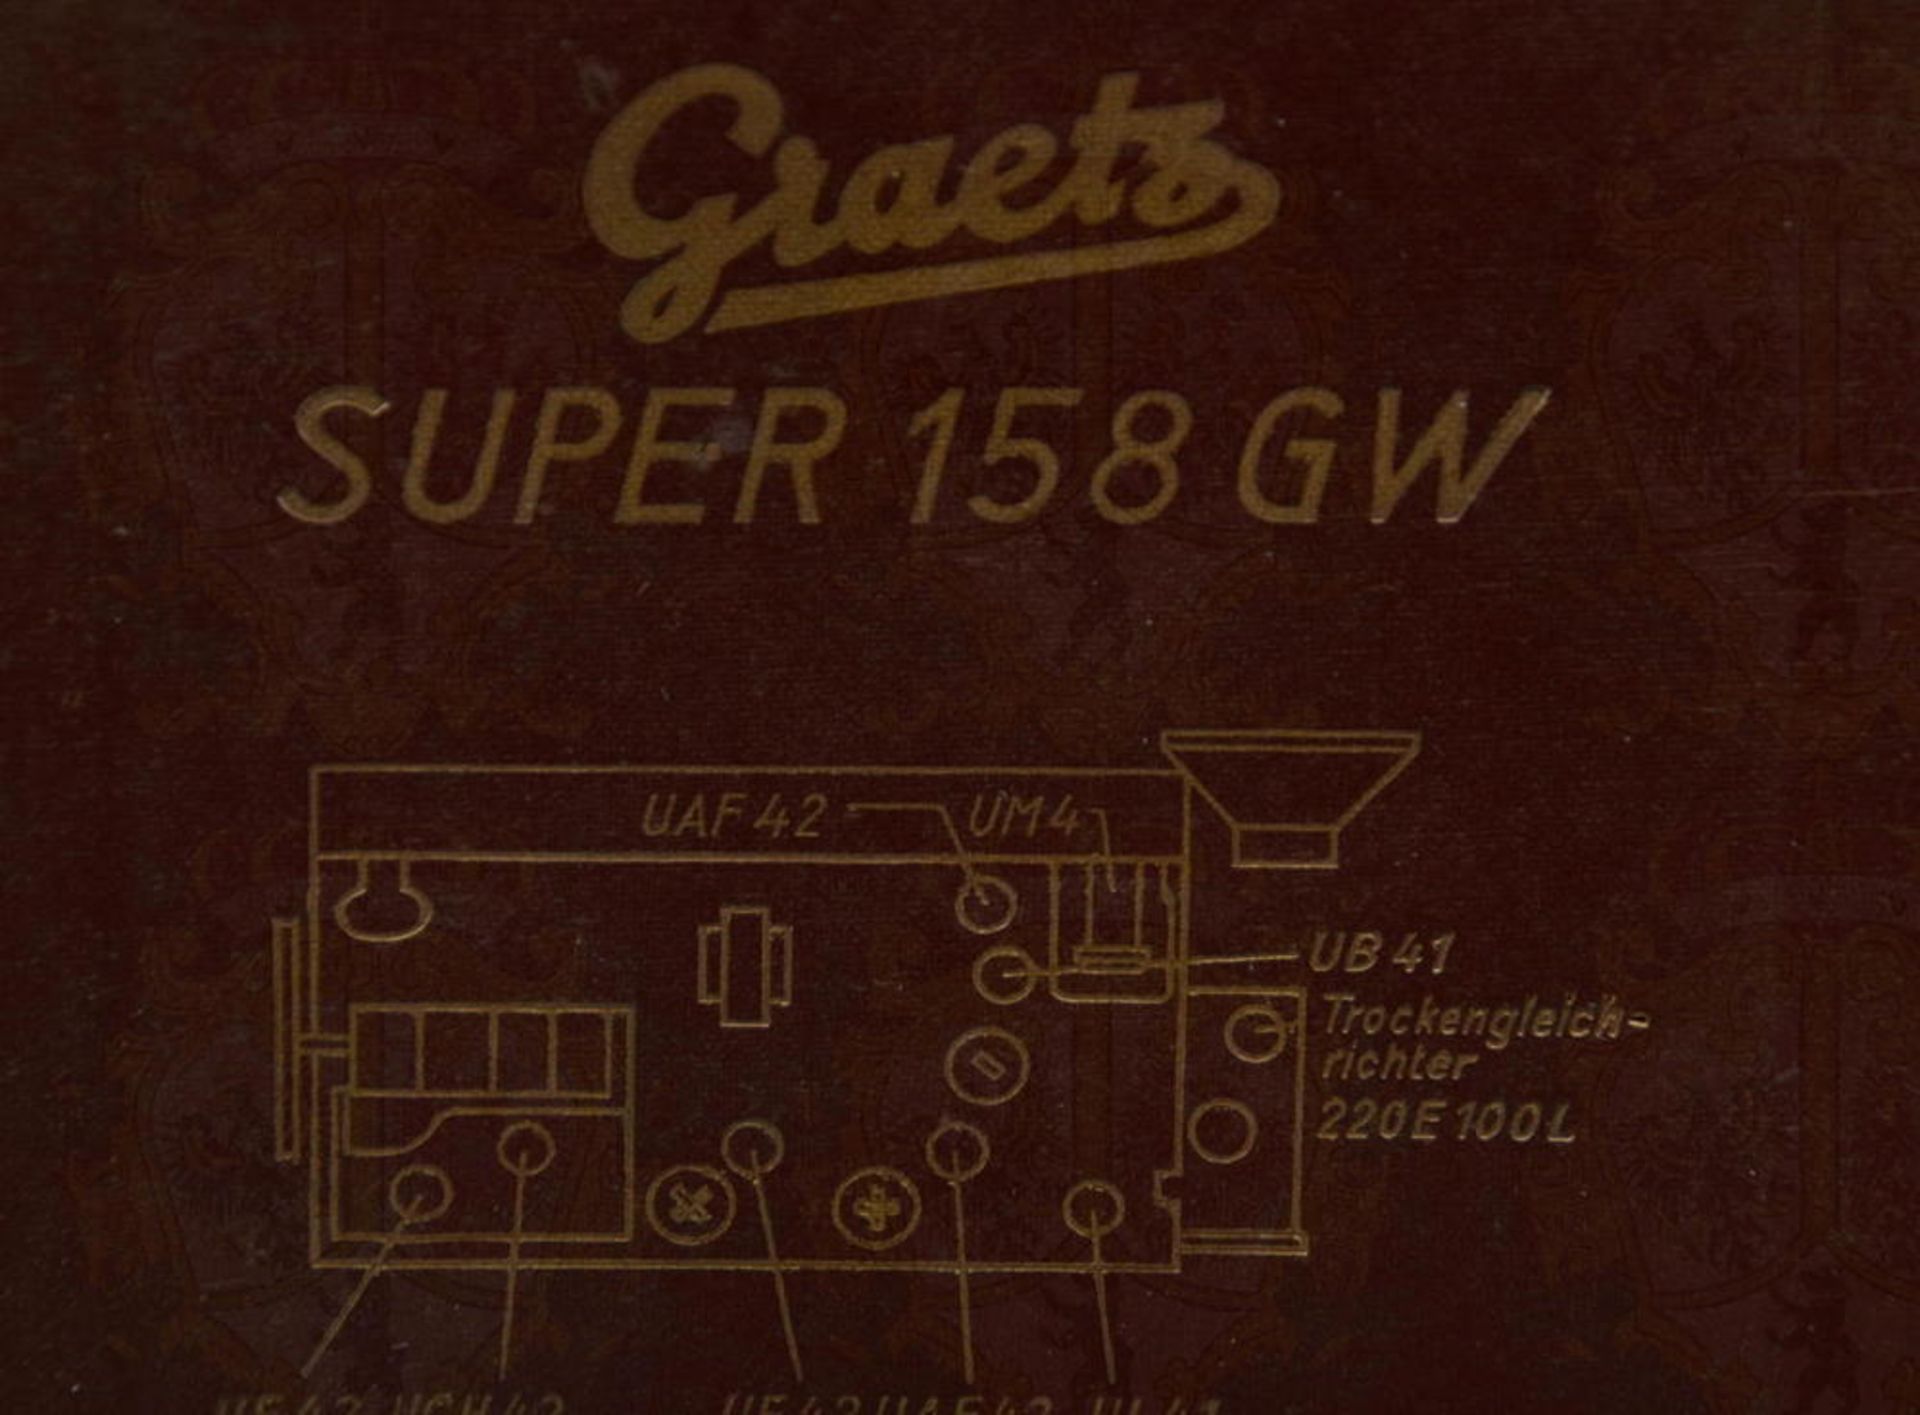 Radio Graetz Super 158 GW - Bild 5 aus 5